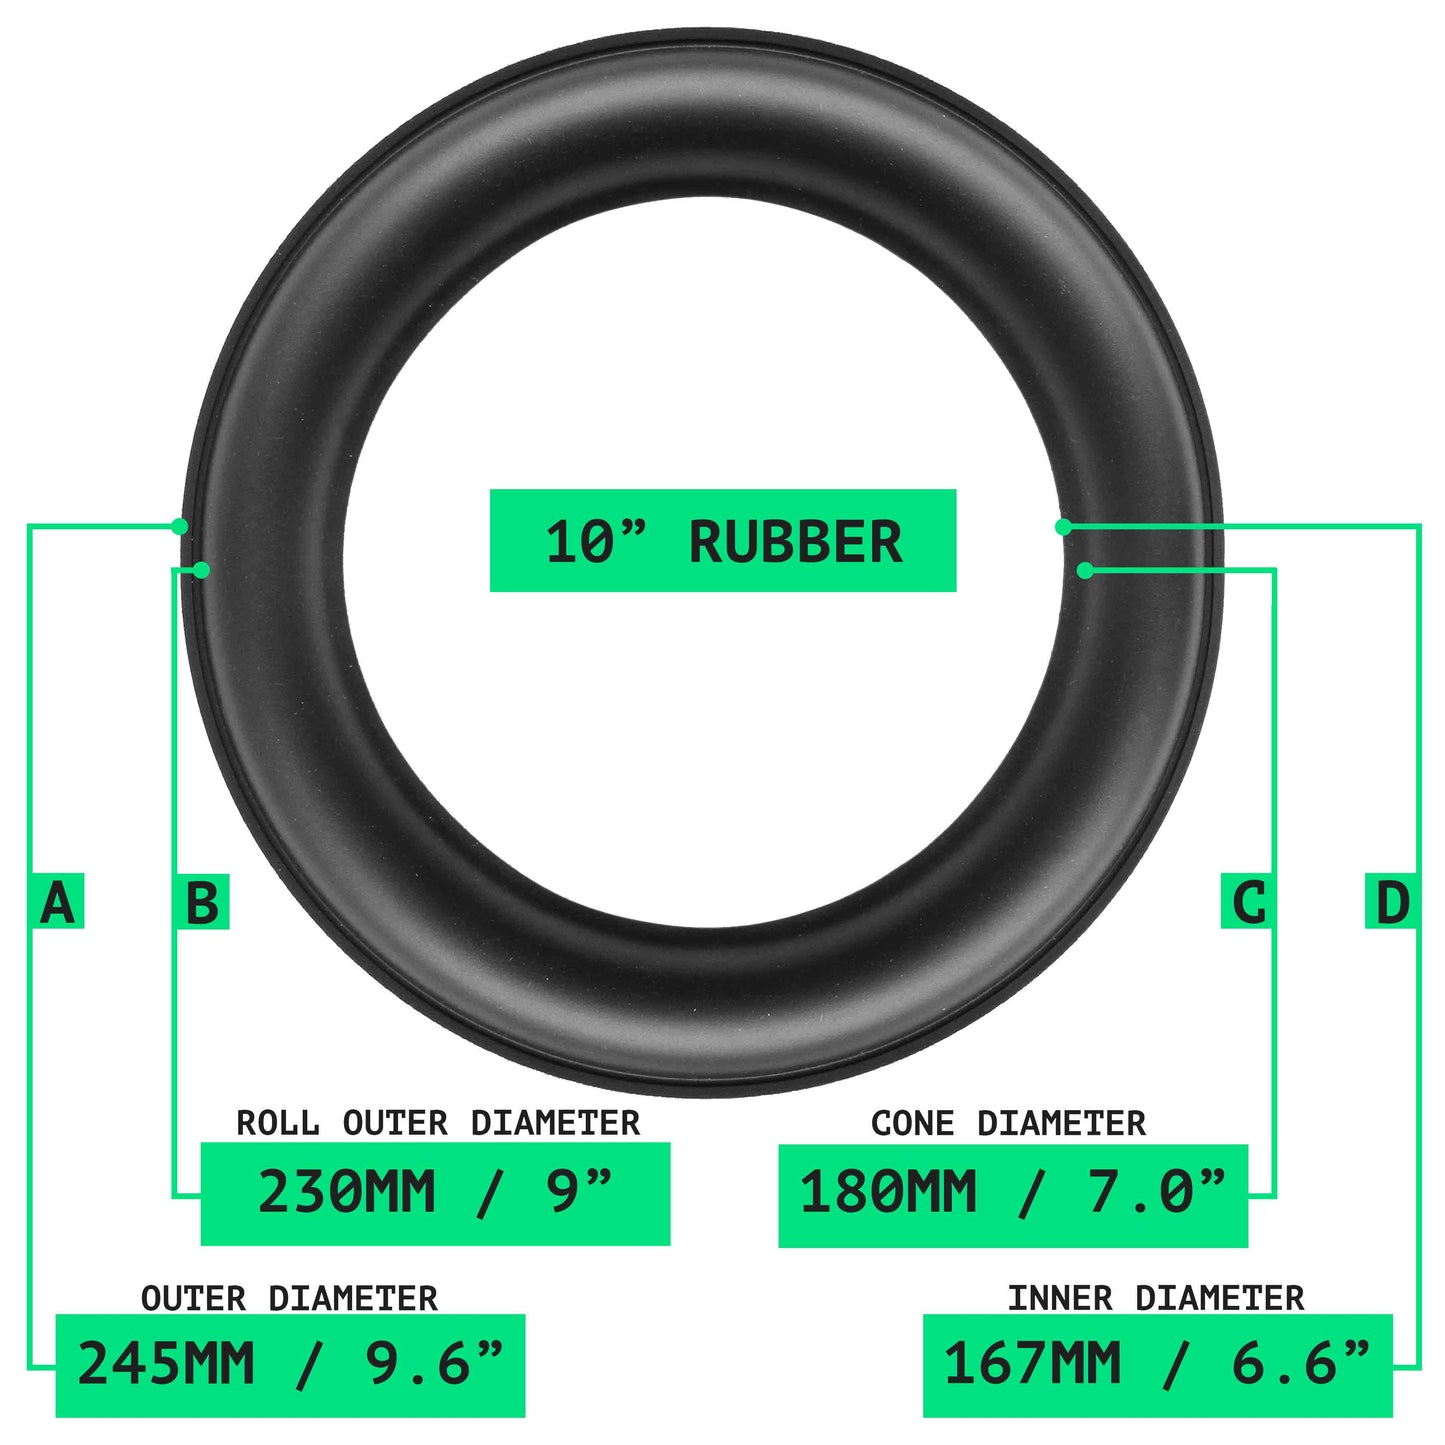 10" Rubber Surround (C) - OD:245MM ID:167MM